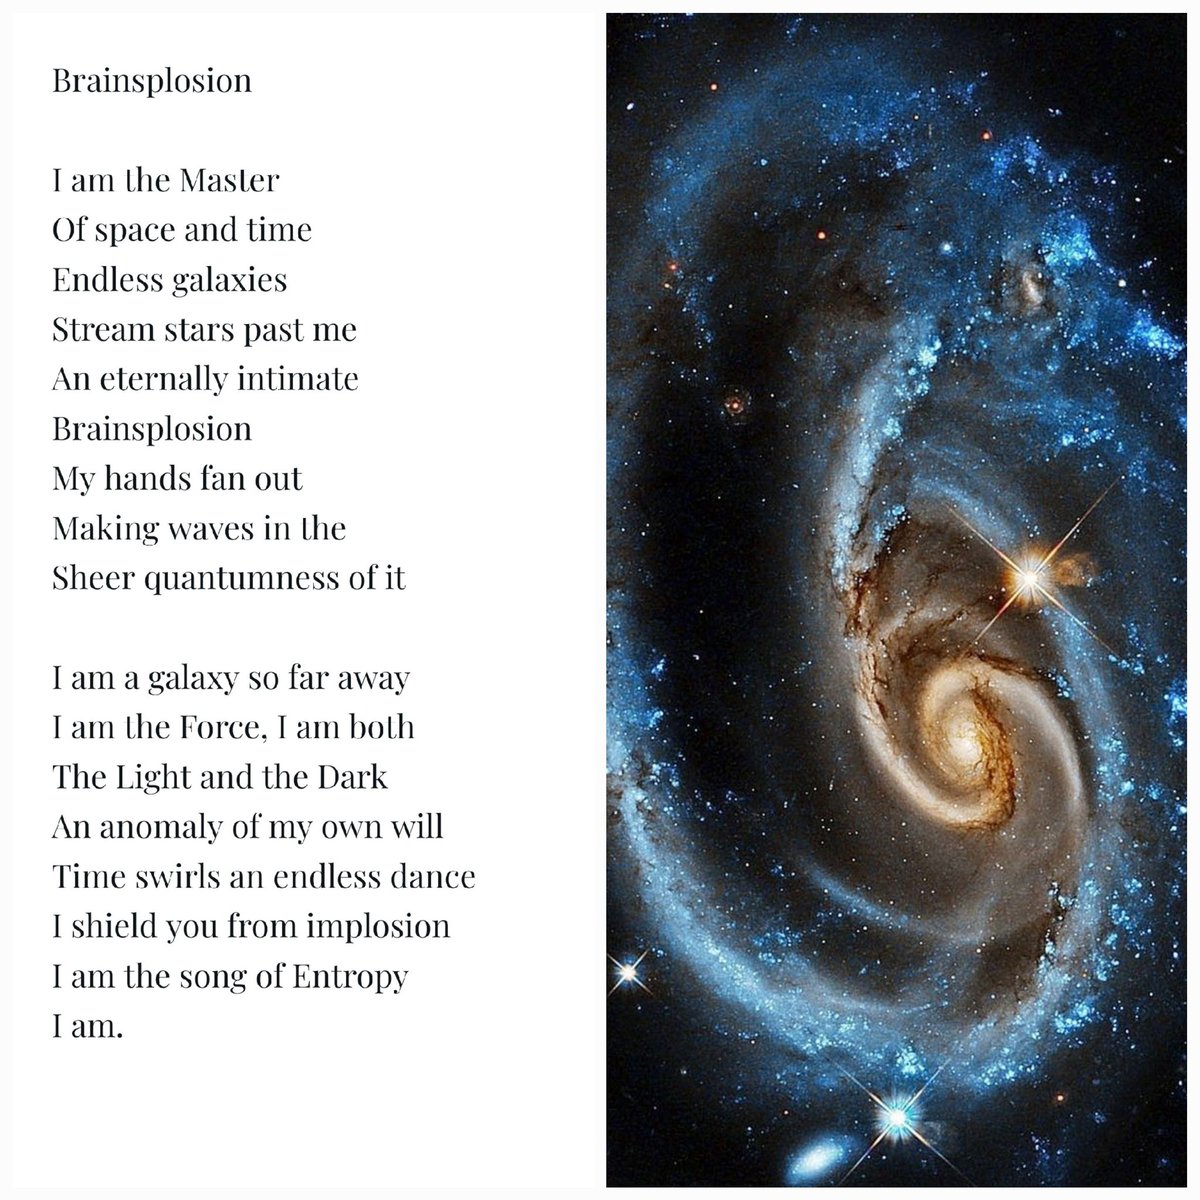 #Necroschallenge #Brainsplosion #Poetry #Galaxyfarfaraway